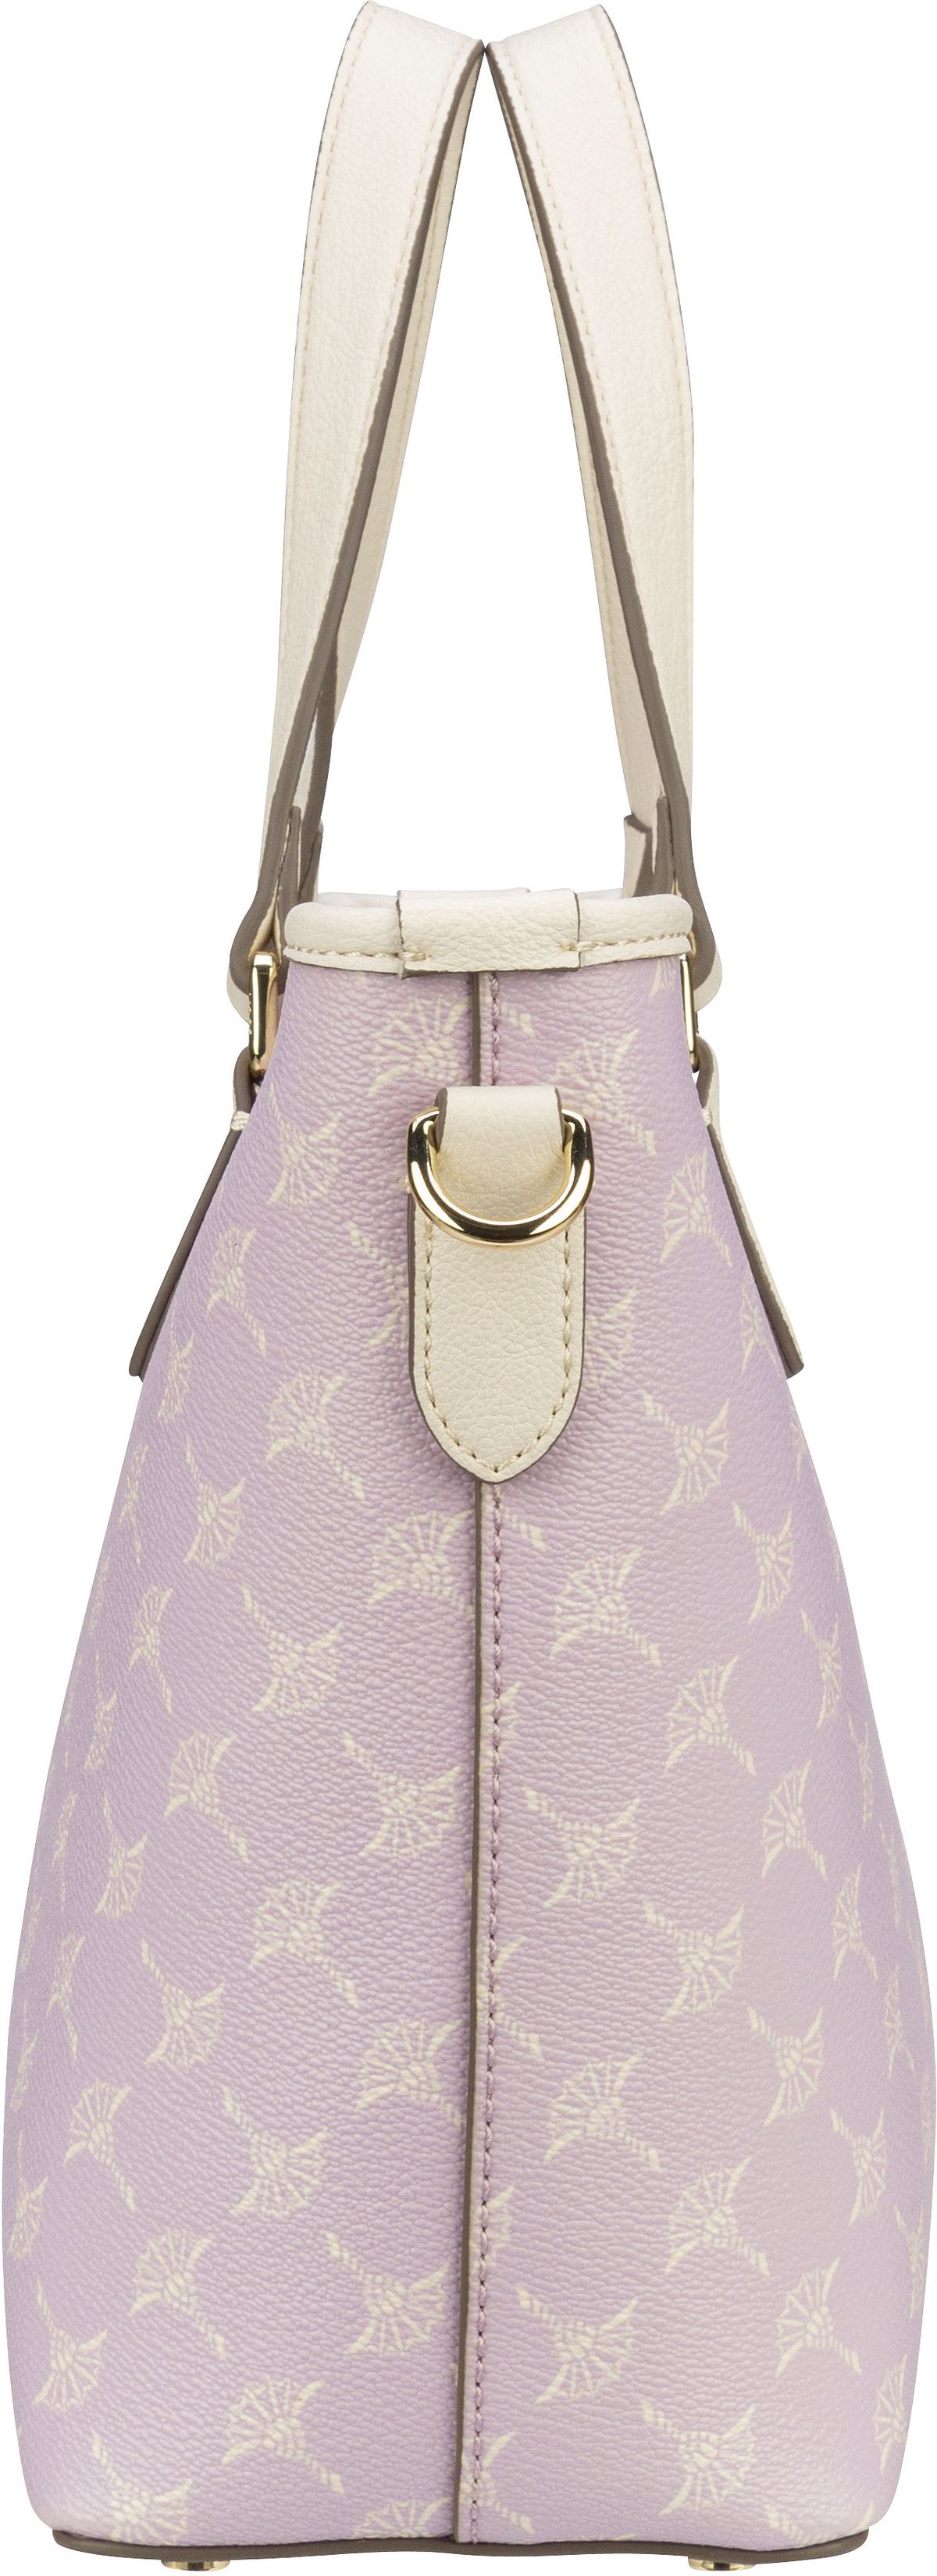 Joop Cortina Diletta Ketty Handbag SHZ - Lavender